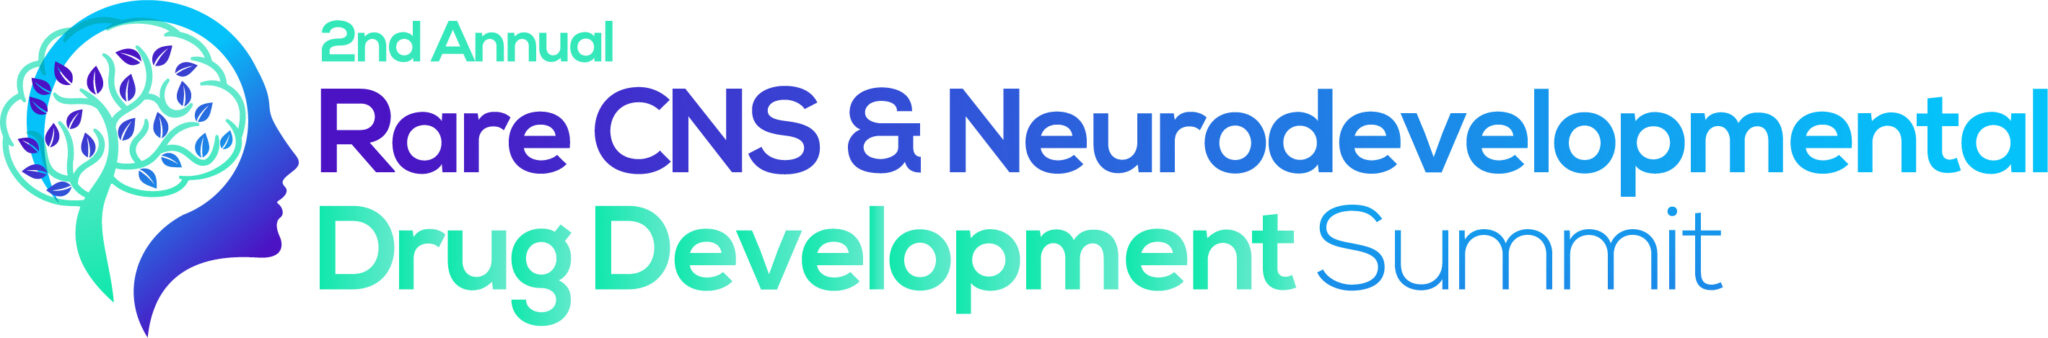 HW220717-26800-2nd-Rare-CNS-Neurodevelopmental-Drug-Development-Summit-logo-2048x338-1